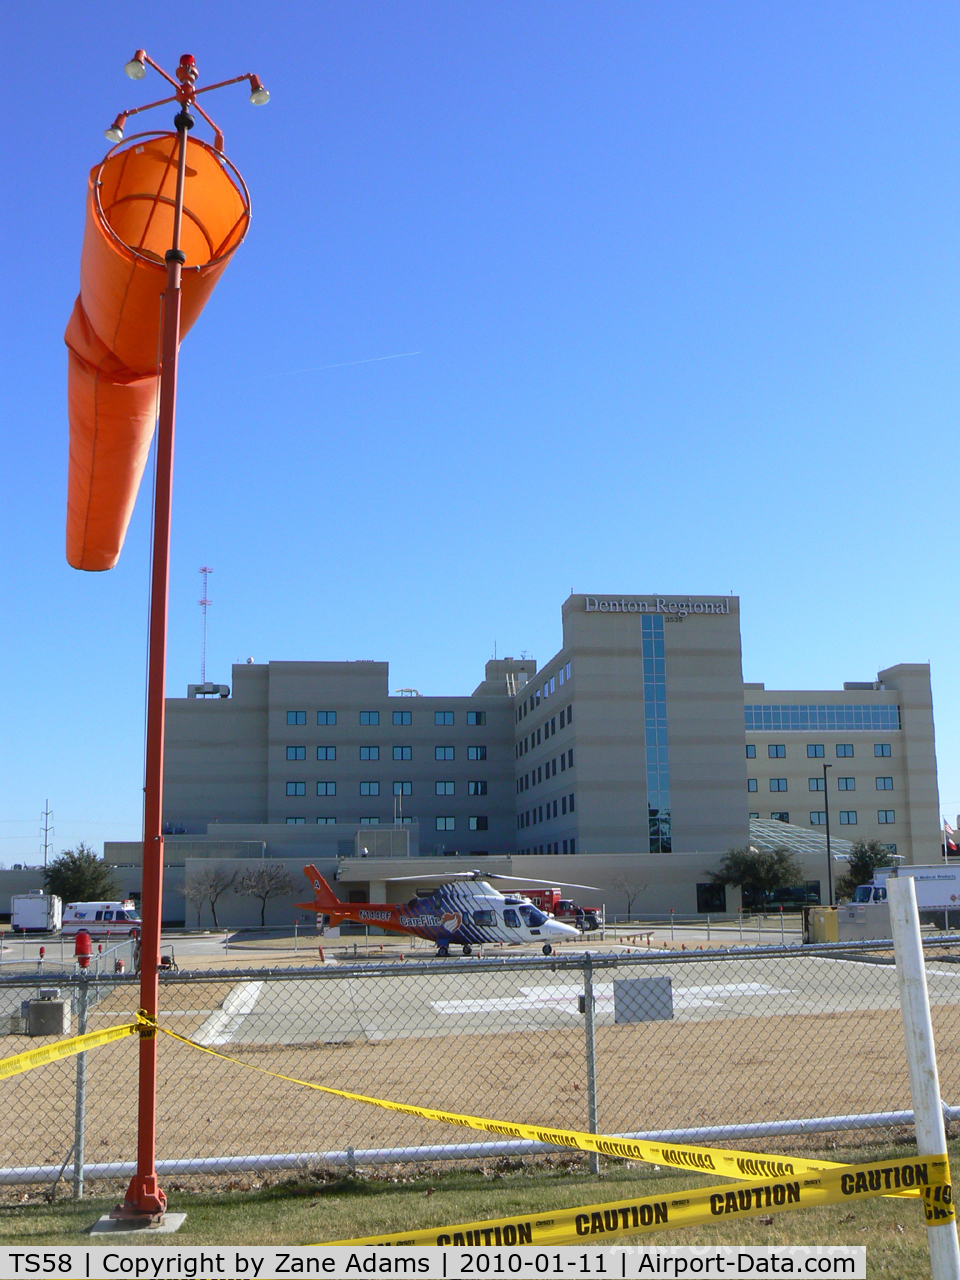 Denton Regional Medical Ctr - Flow Campus Heliport (TS58) - Care Flite at the Denton Regional Medical Center